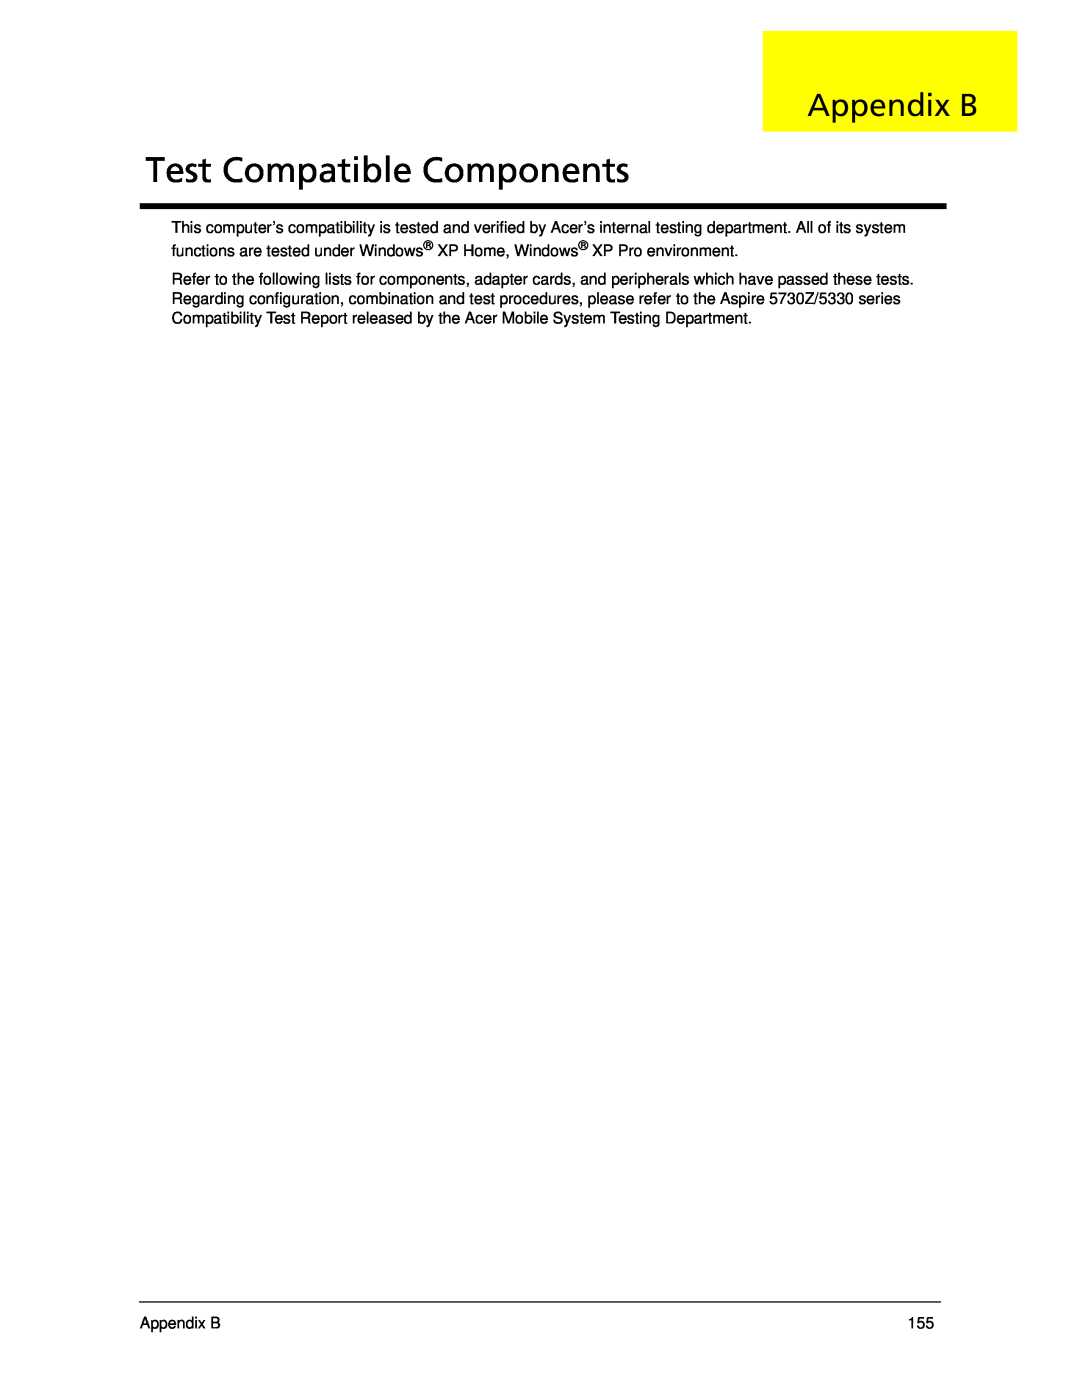 Acer 5330 manual Test Compatible Components, Appendix B 